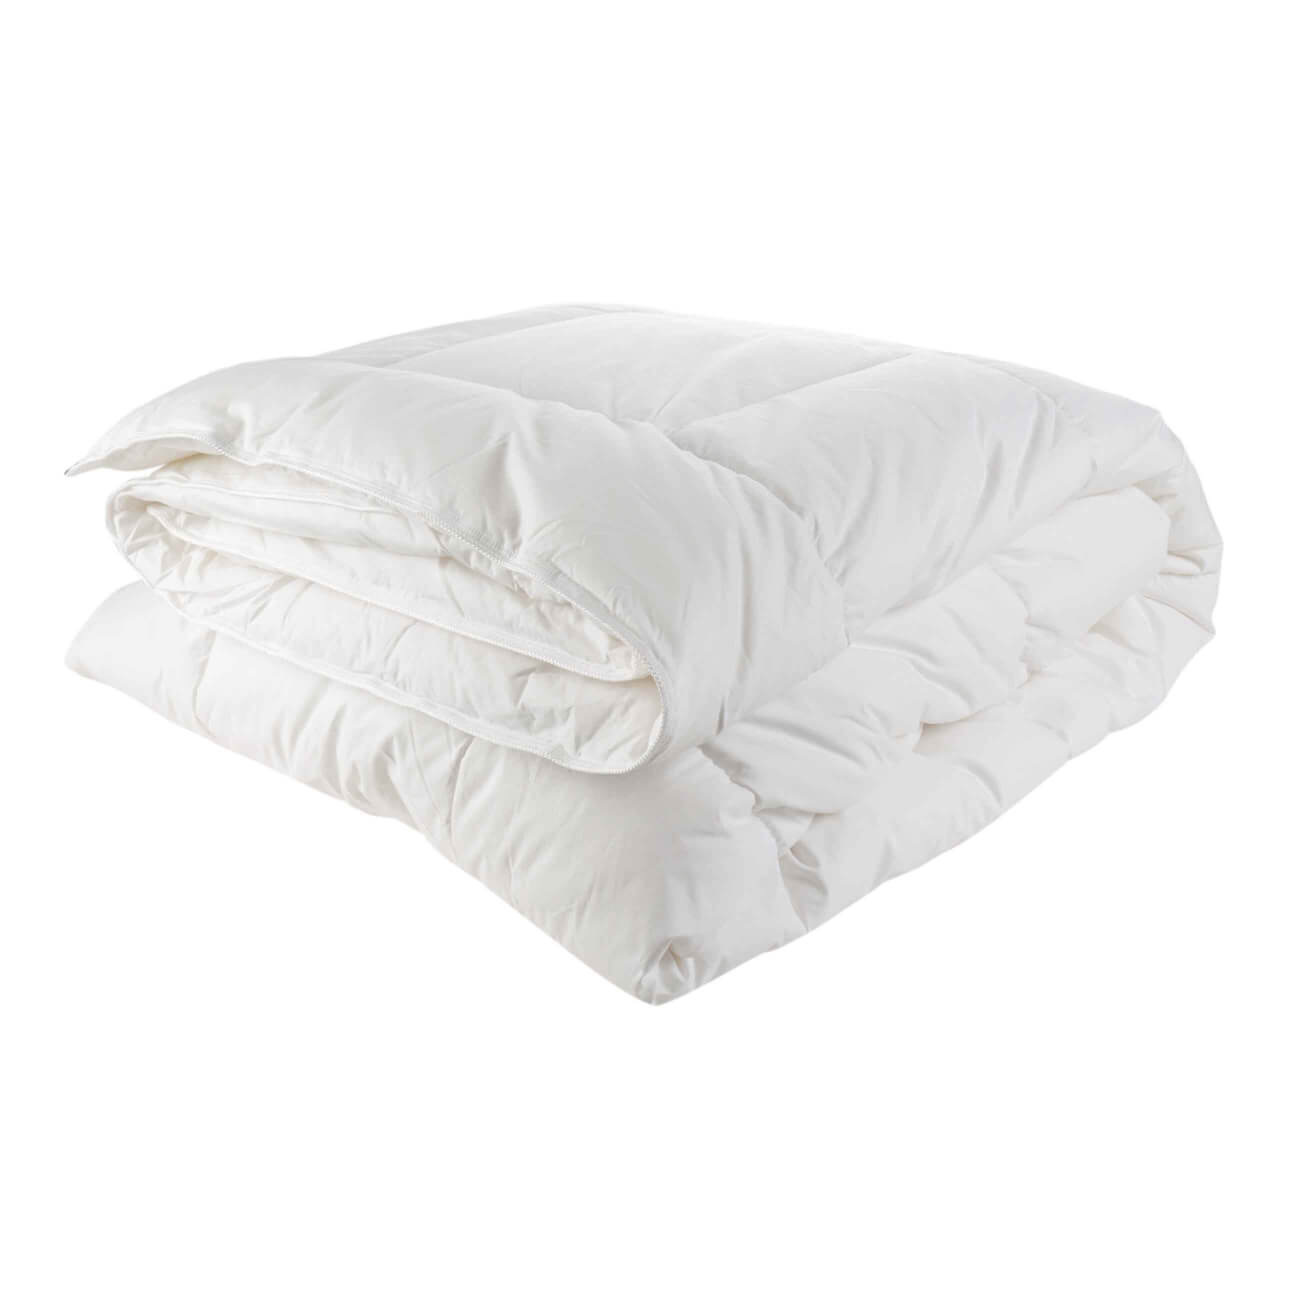 Одеяло, 200х220 см, хлопок/микрофибра, Soft cotton одеяло 140х200 см микрофибра simply soft